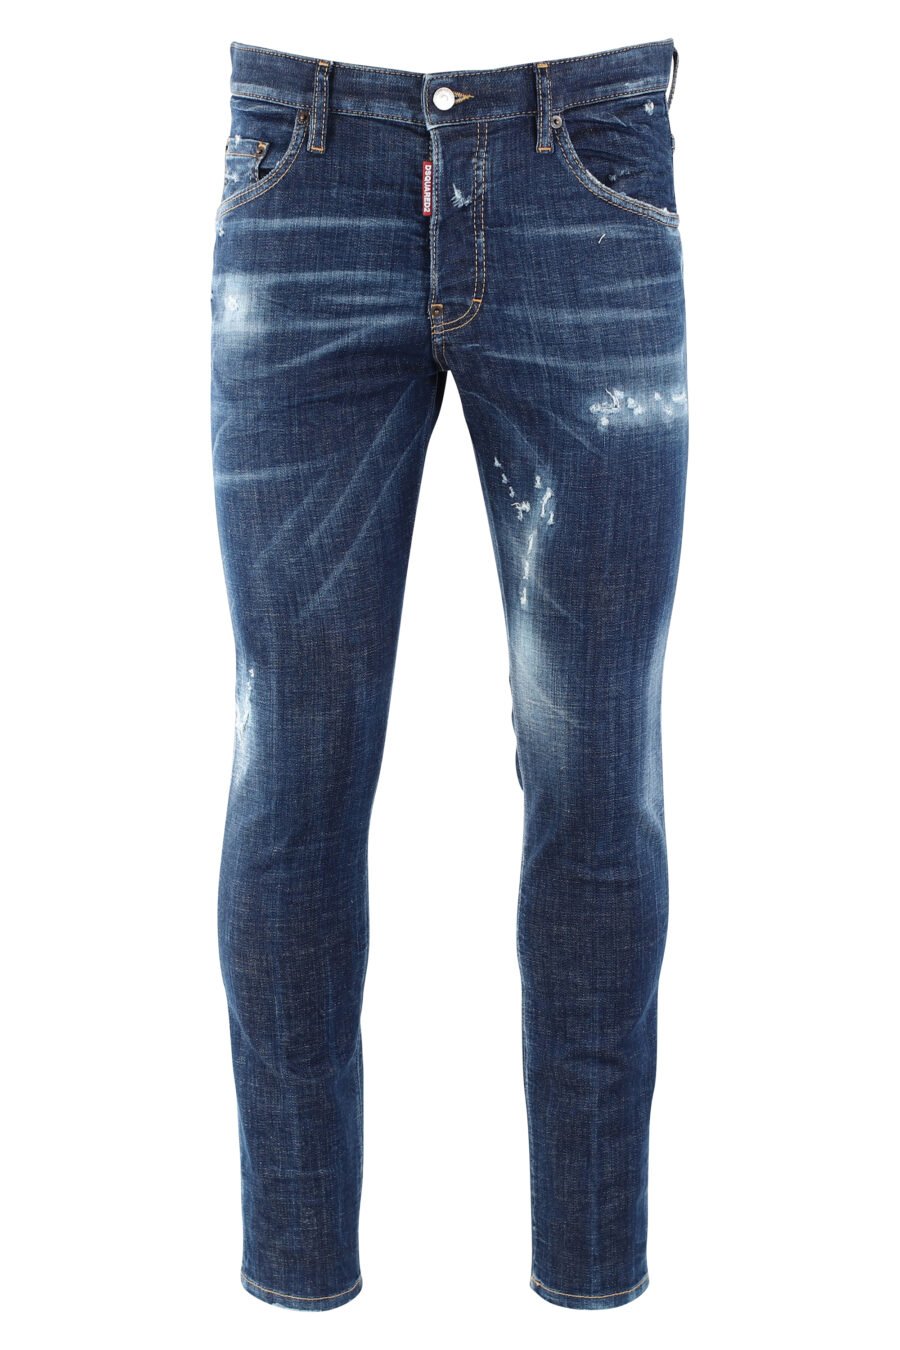 Jeanshose "icon skater jean" dunkelblau semi-getragen - IMG 9653